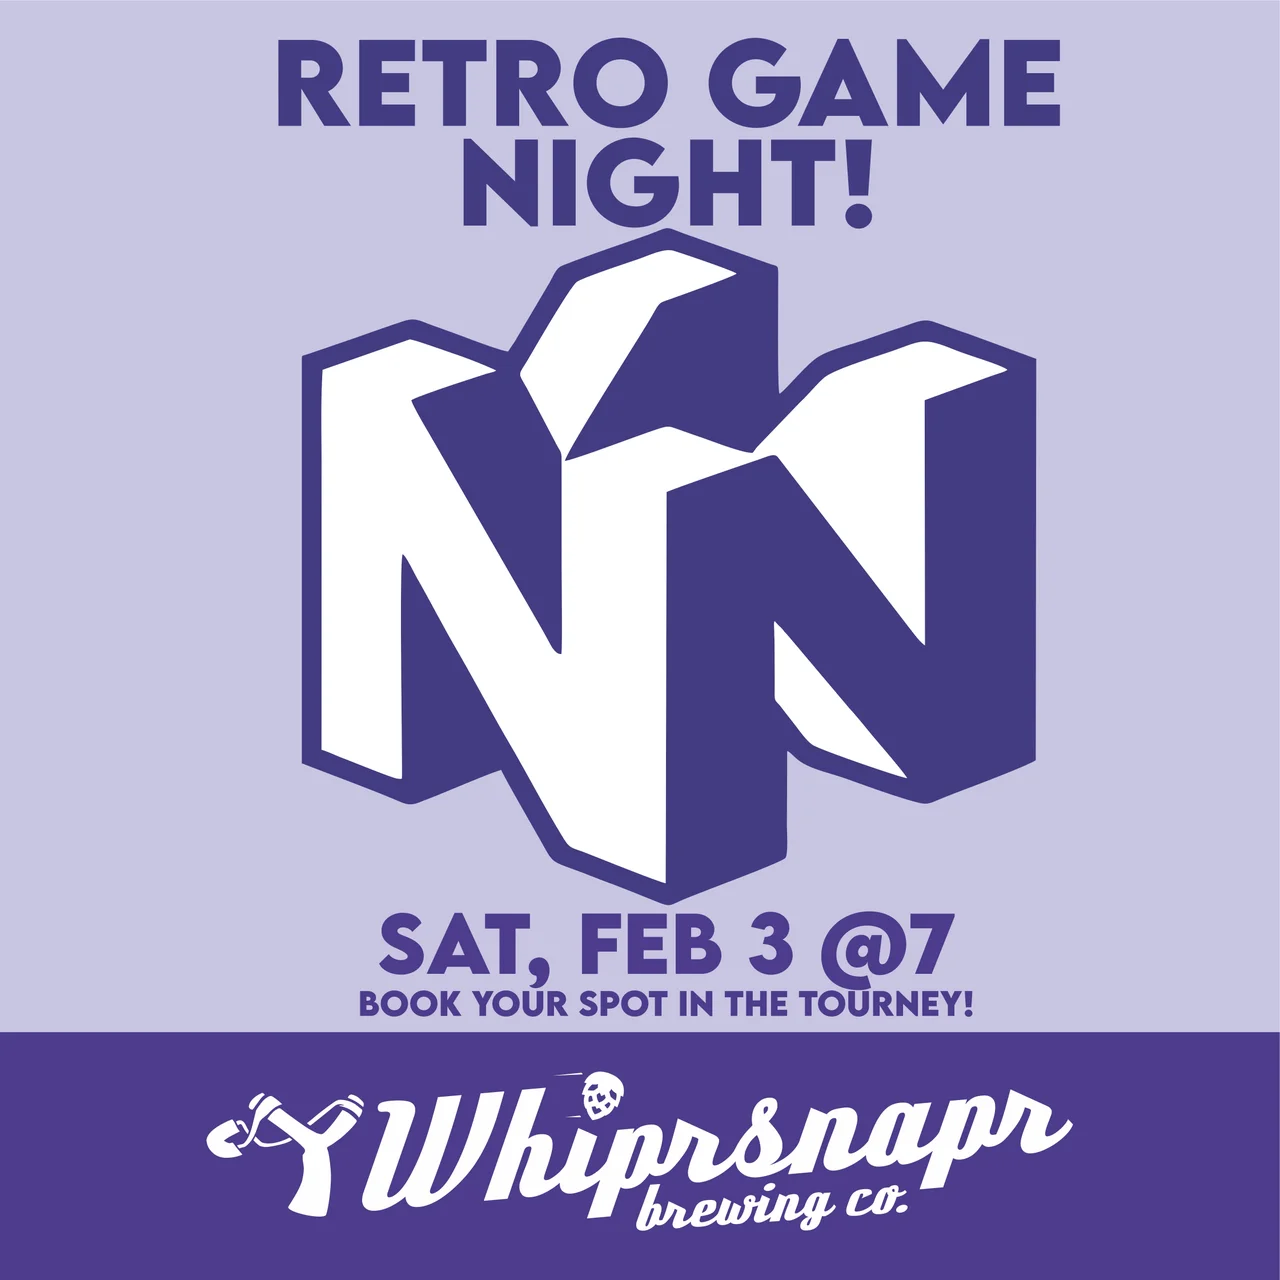 The logo for retro game night.